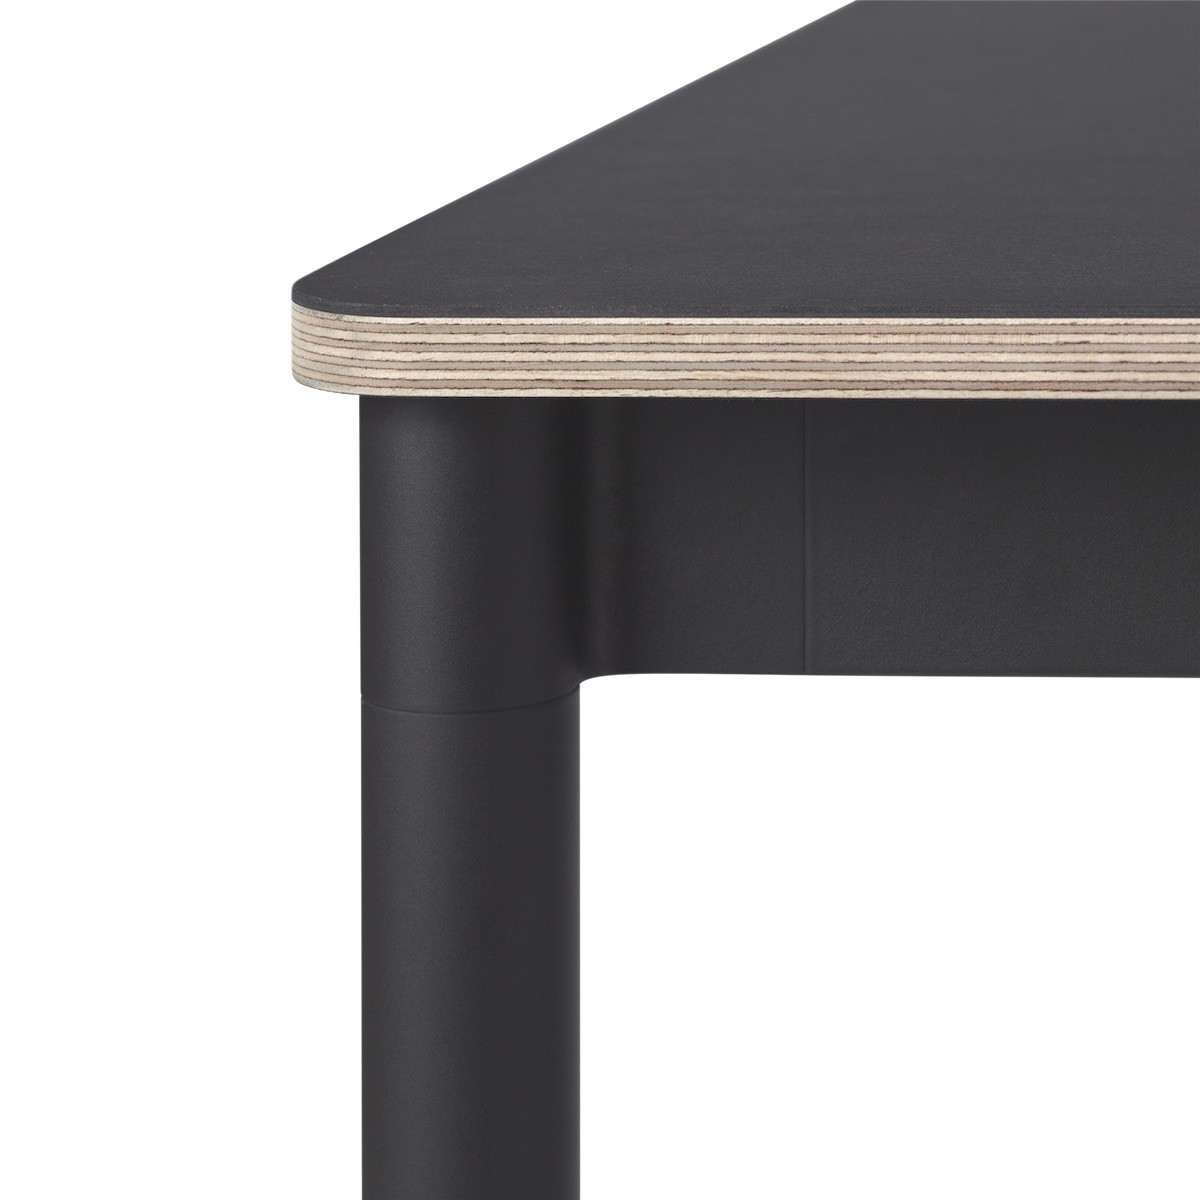 Black (laminate) / Plywood / Black – Base Table 80 x 80 x H73 cm